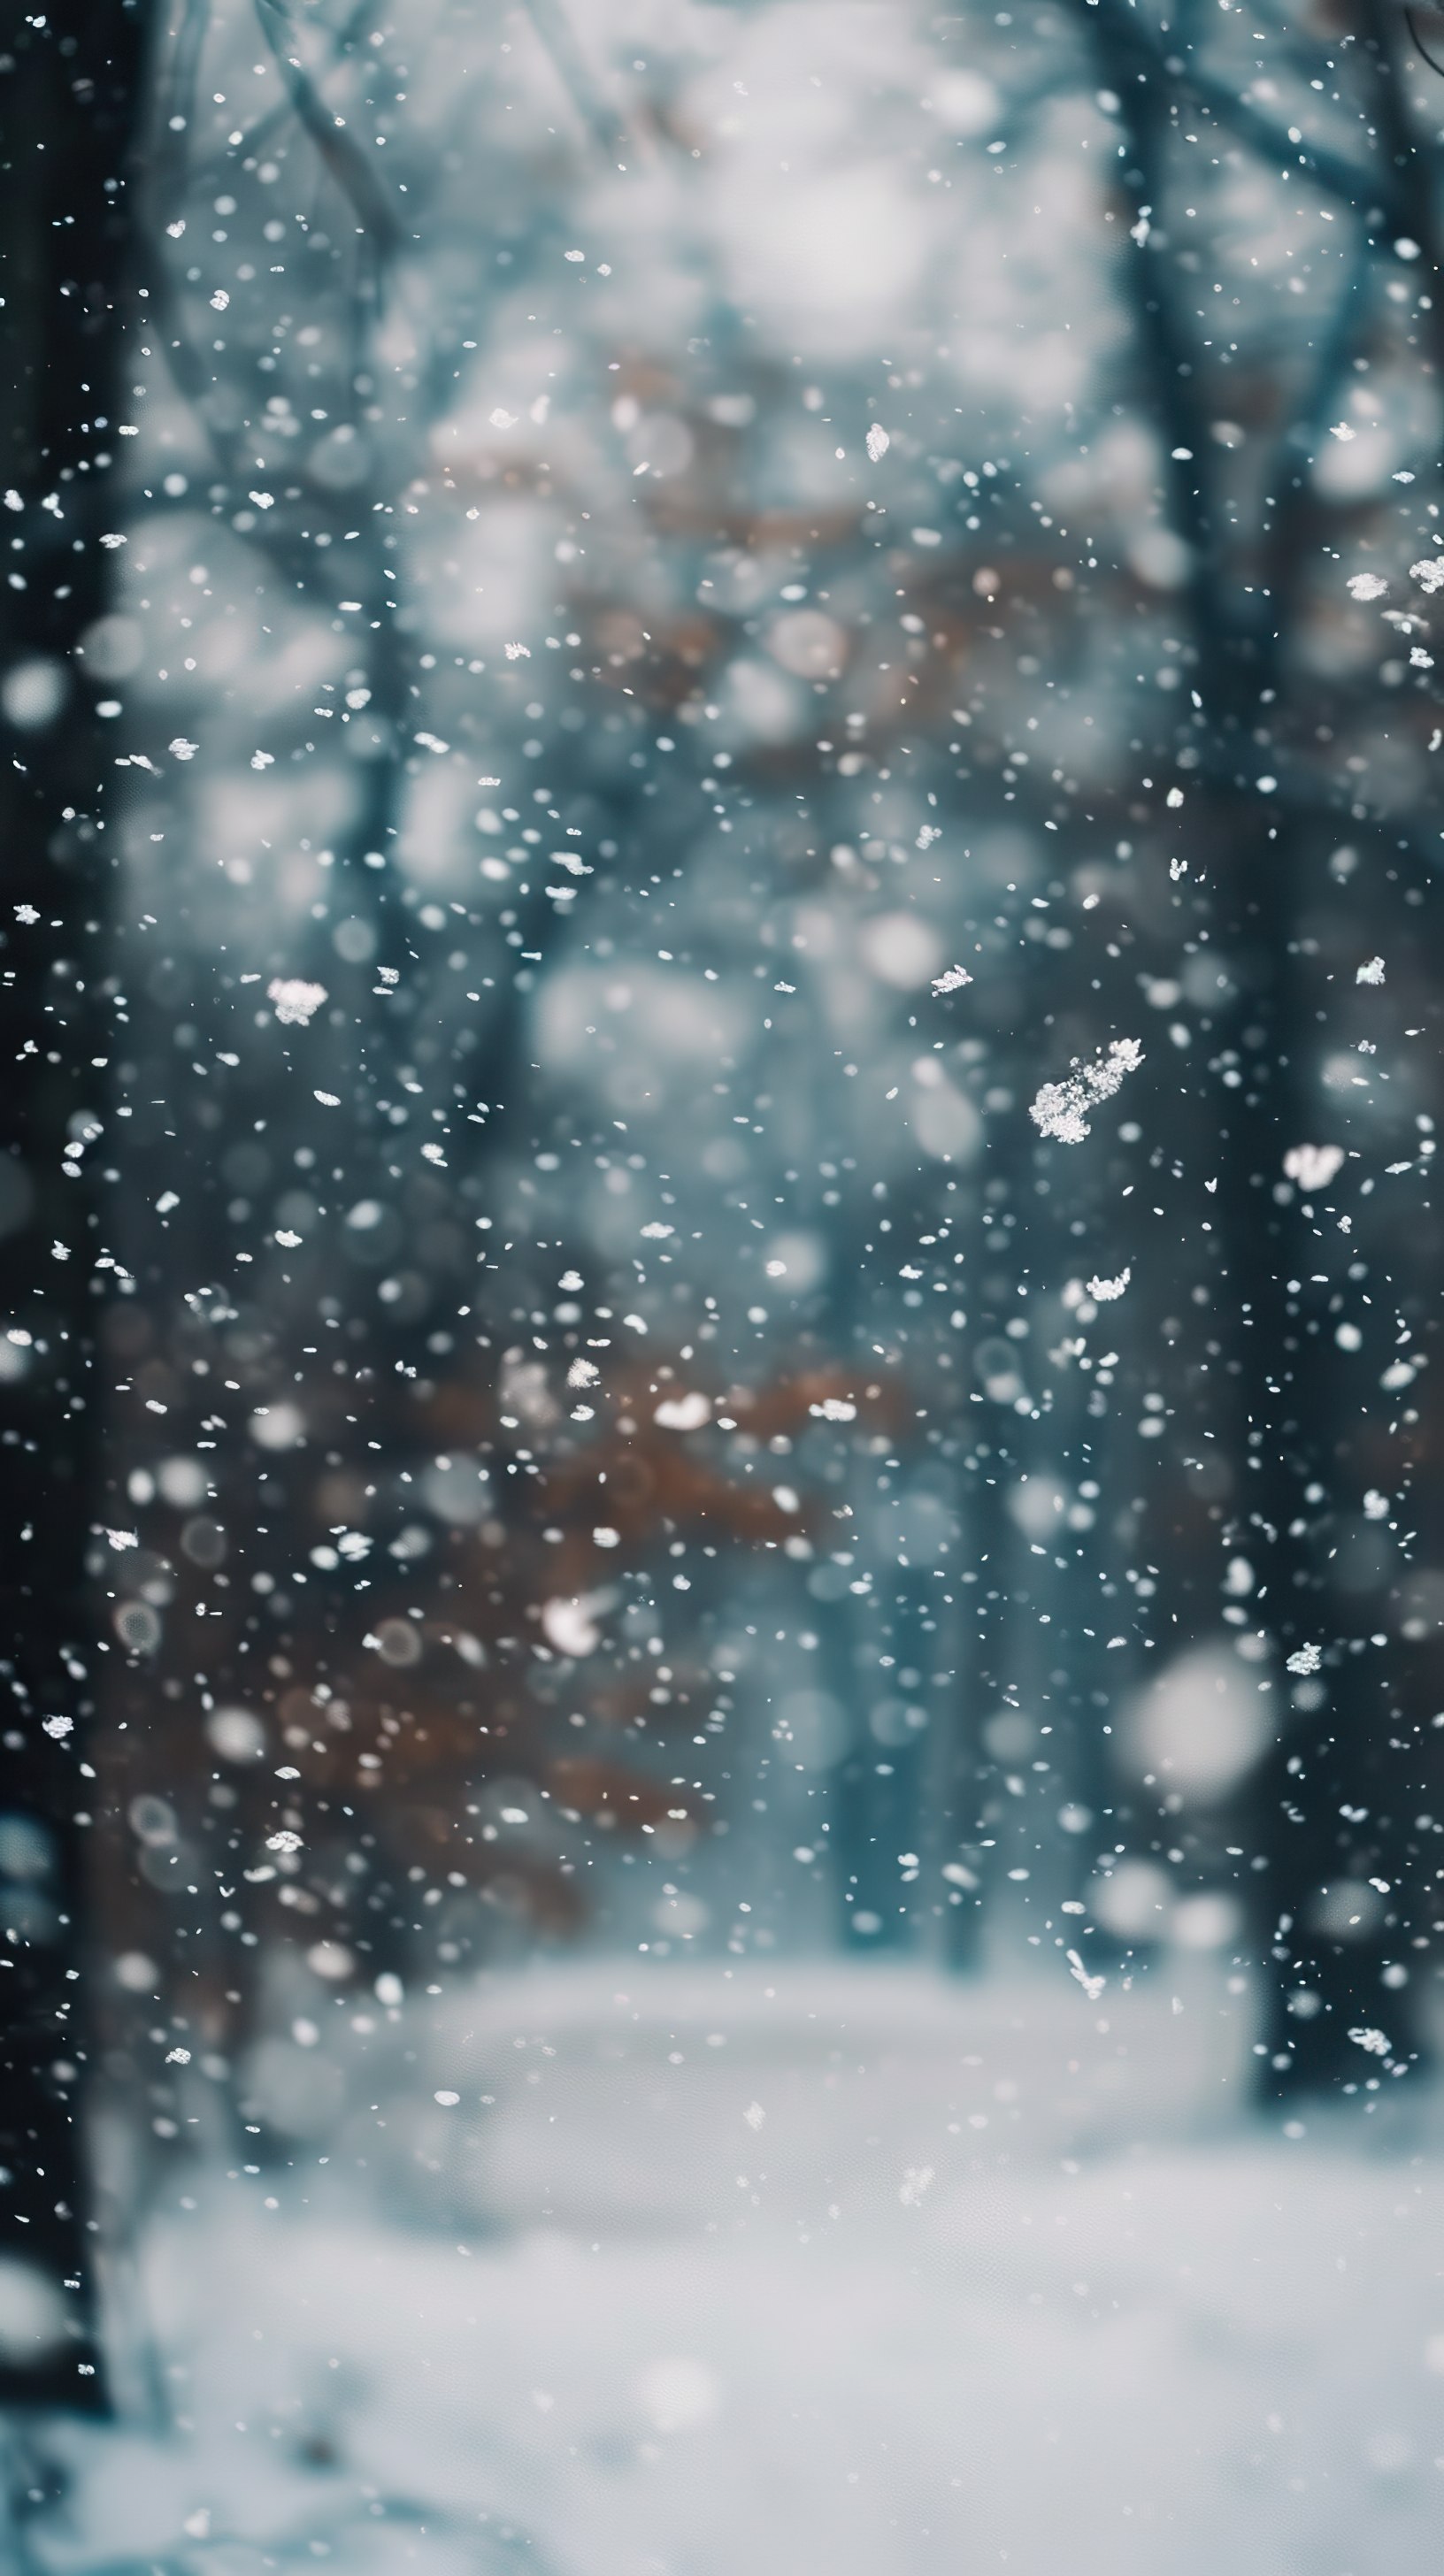 Close-up shot of Snowfall. Beautiful winter background